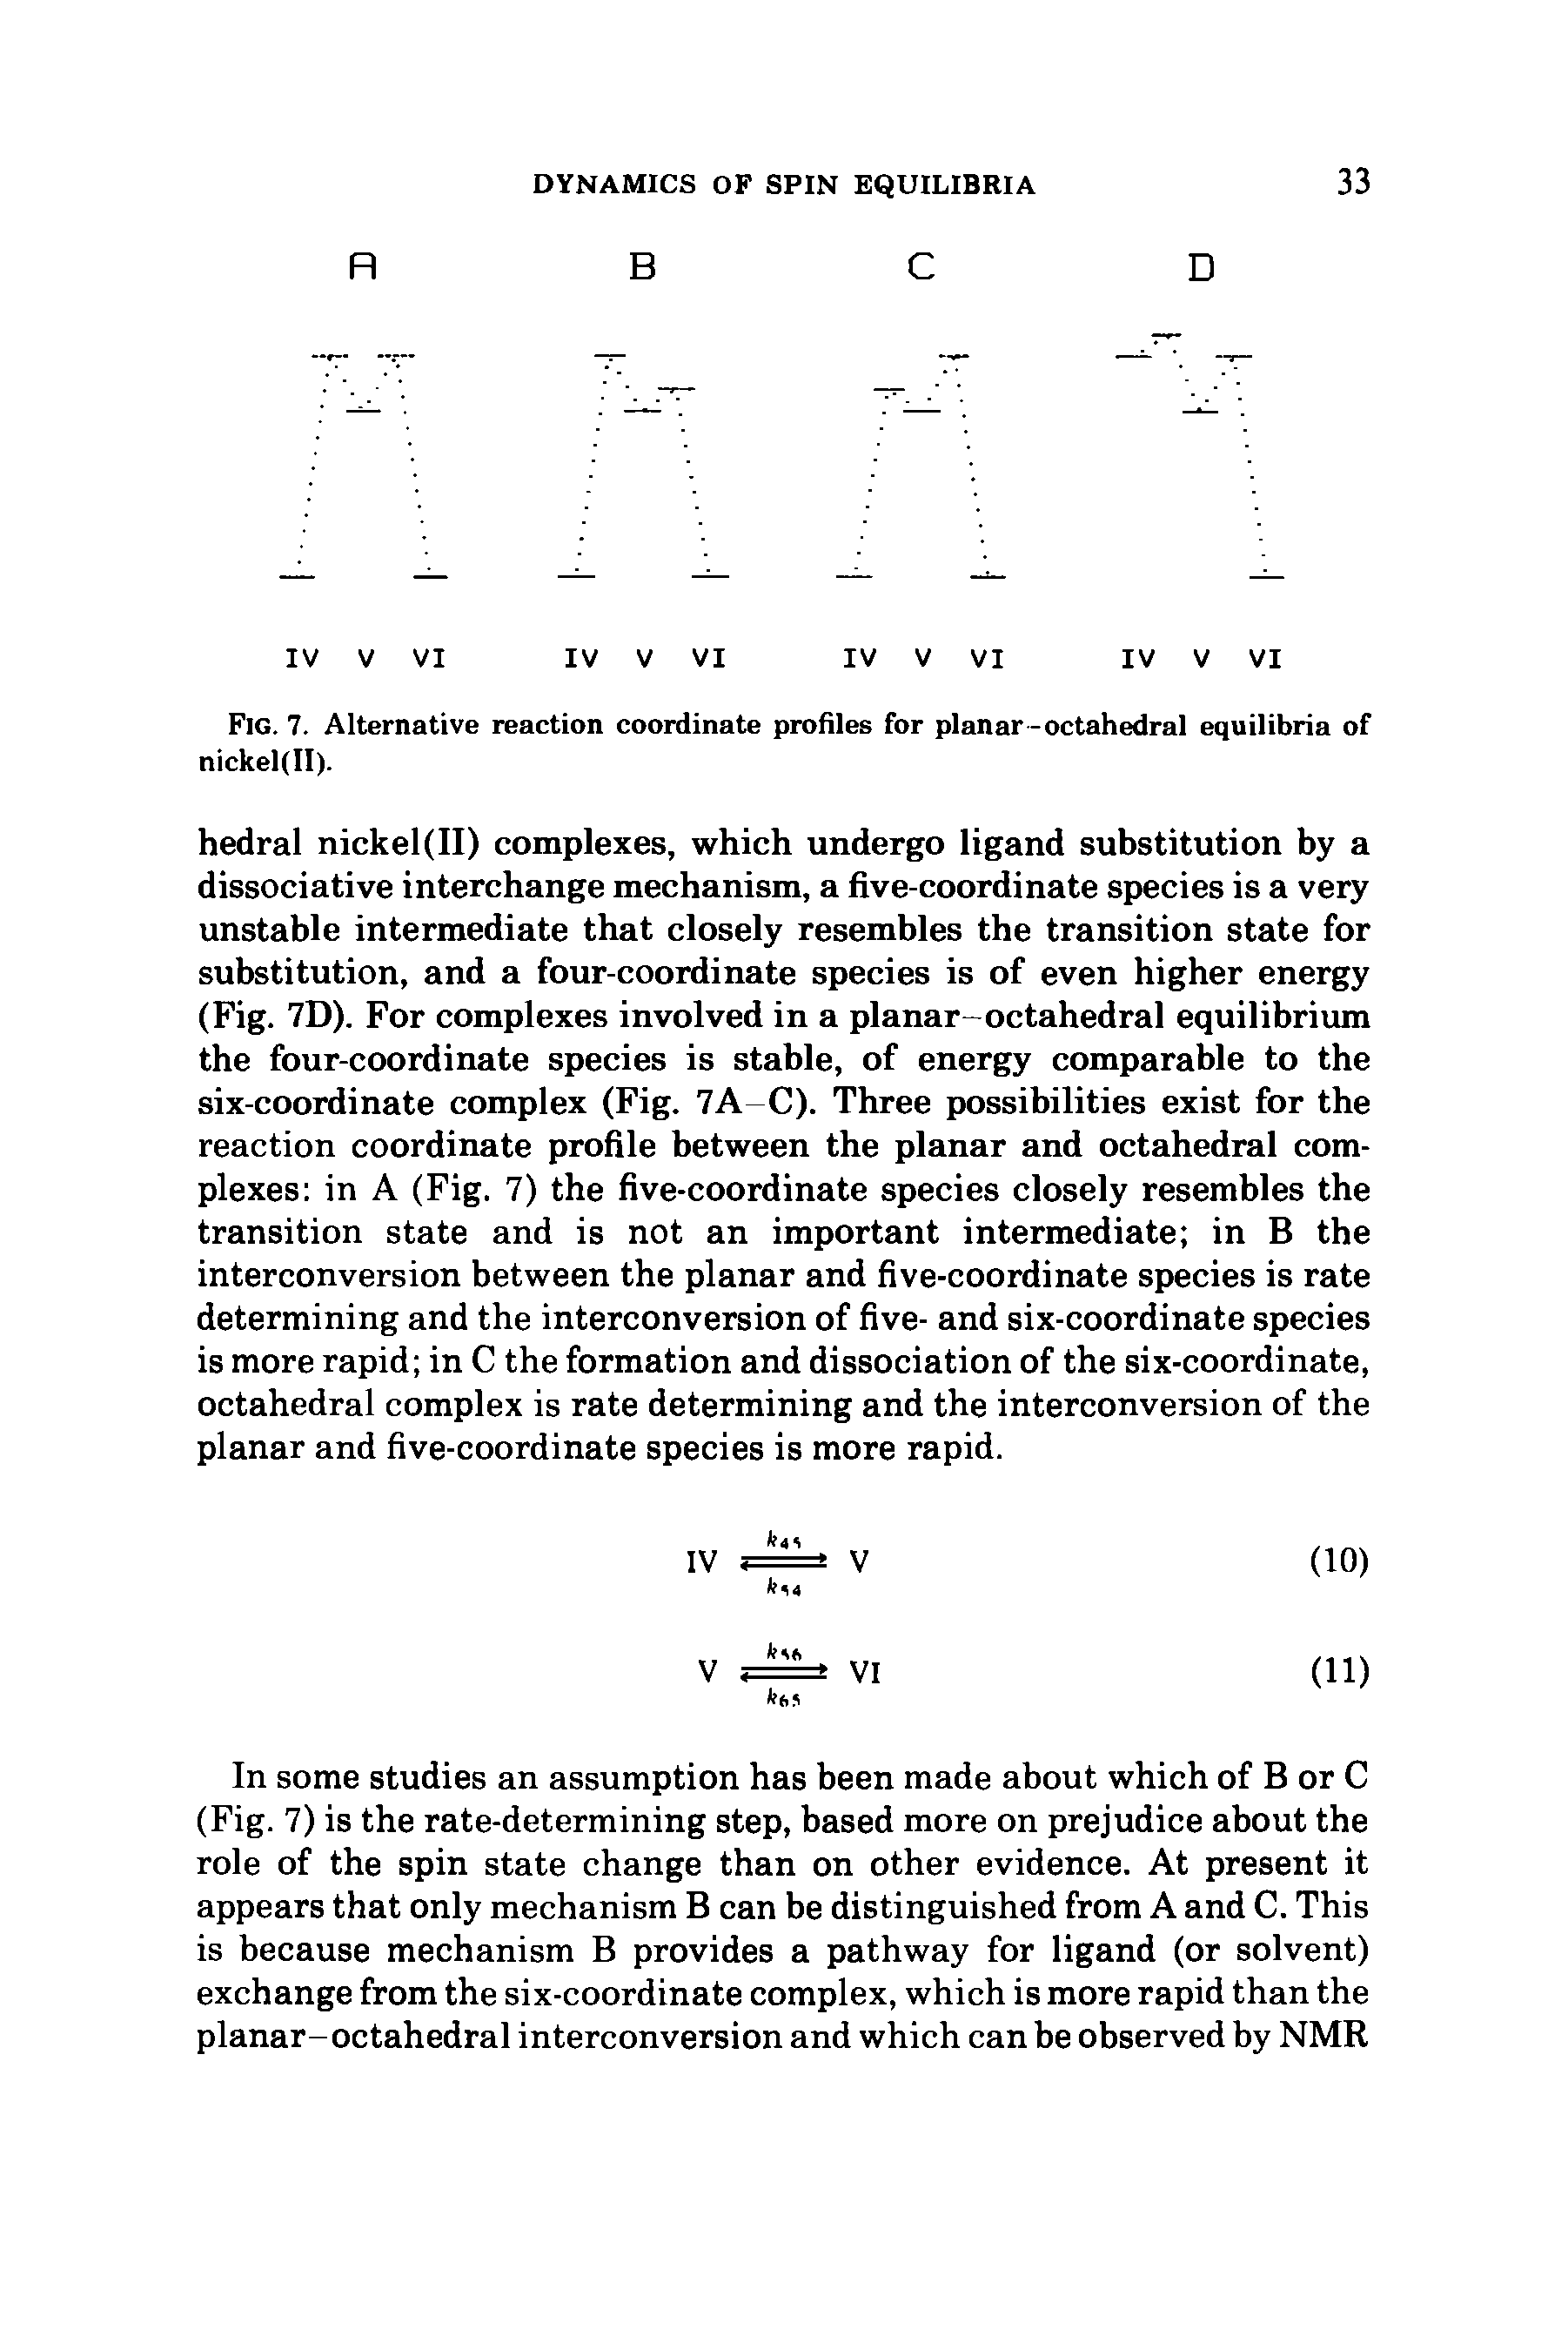 Fig. 7. Alternative reaction coordinate profiles for planar-octahedral equilibria of nickel(II).